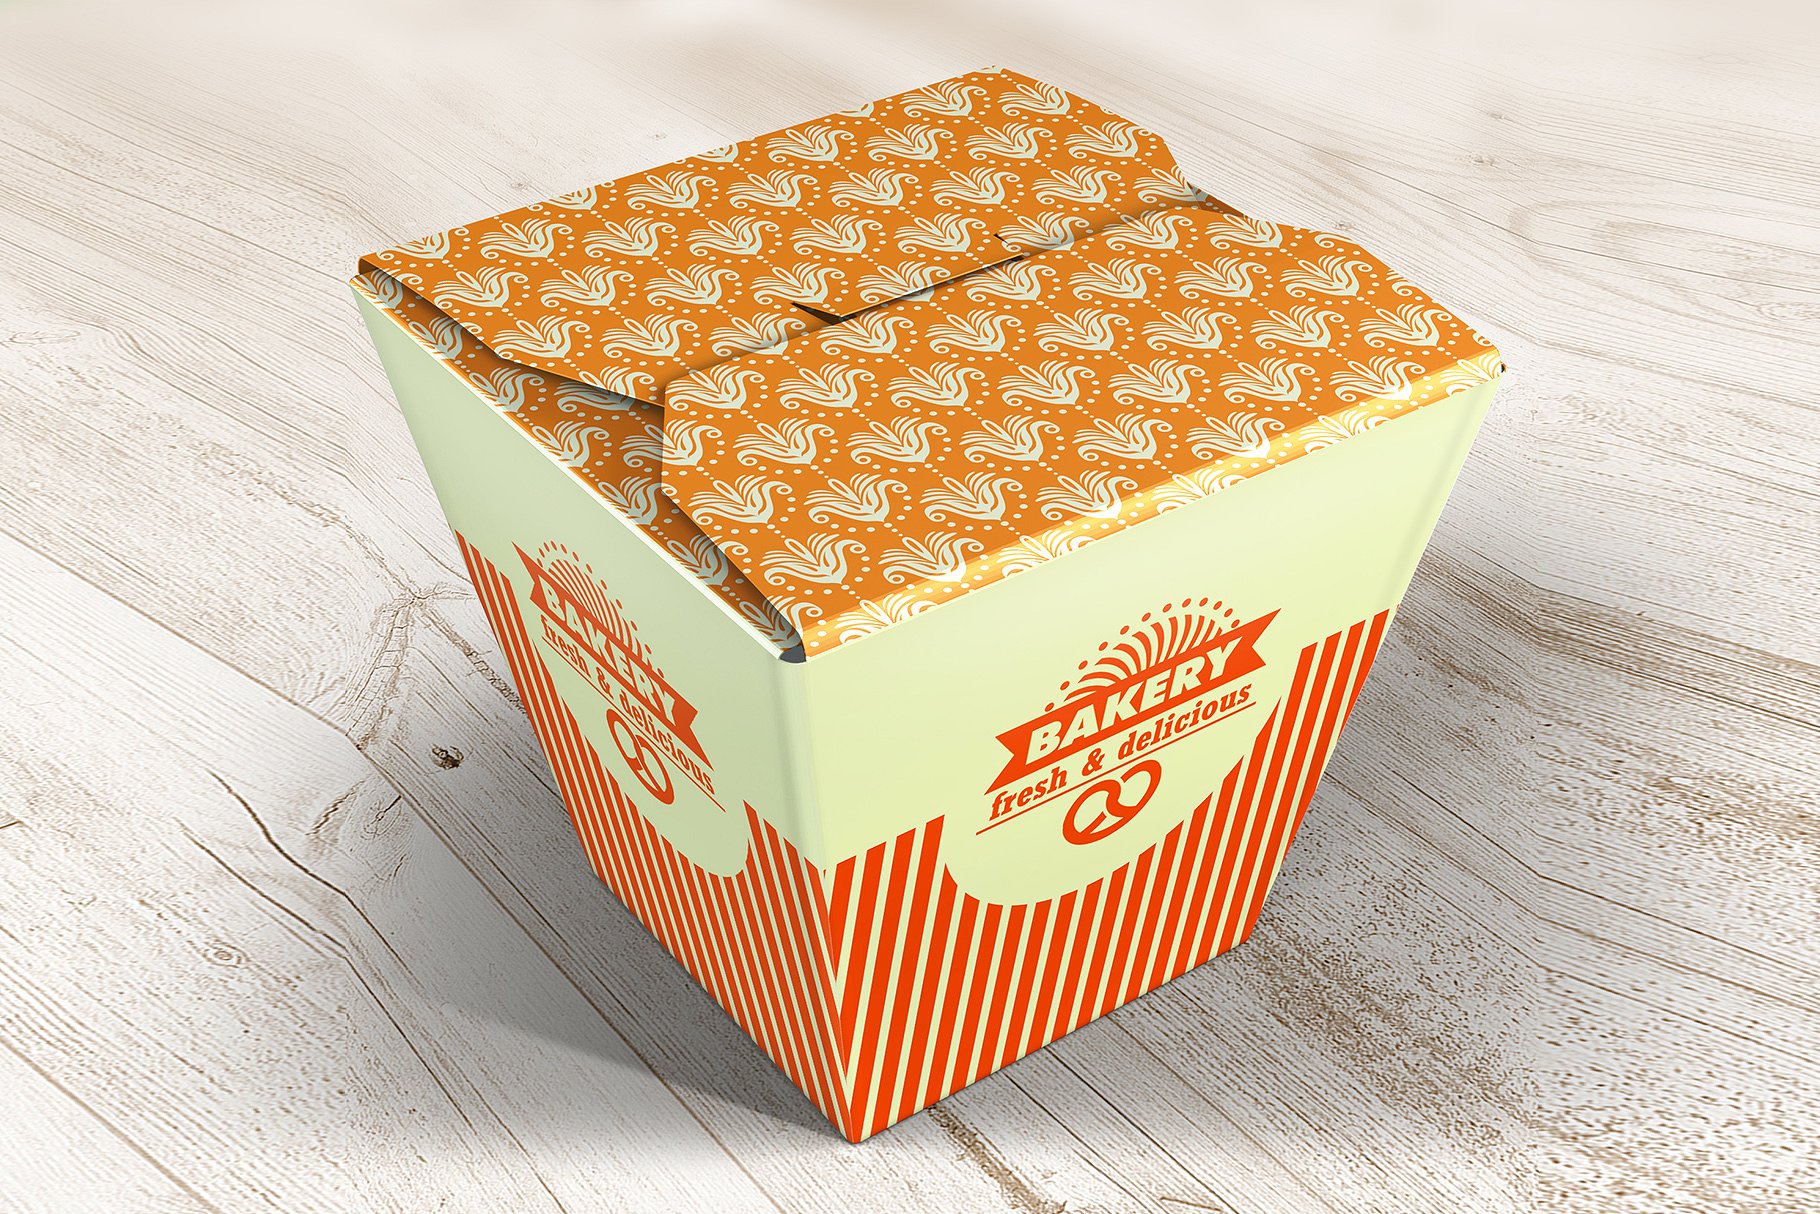 食品包装设计样机 Food Box mockups vol.2插图